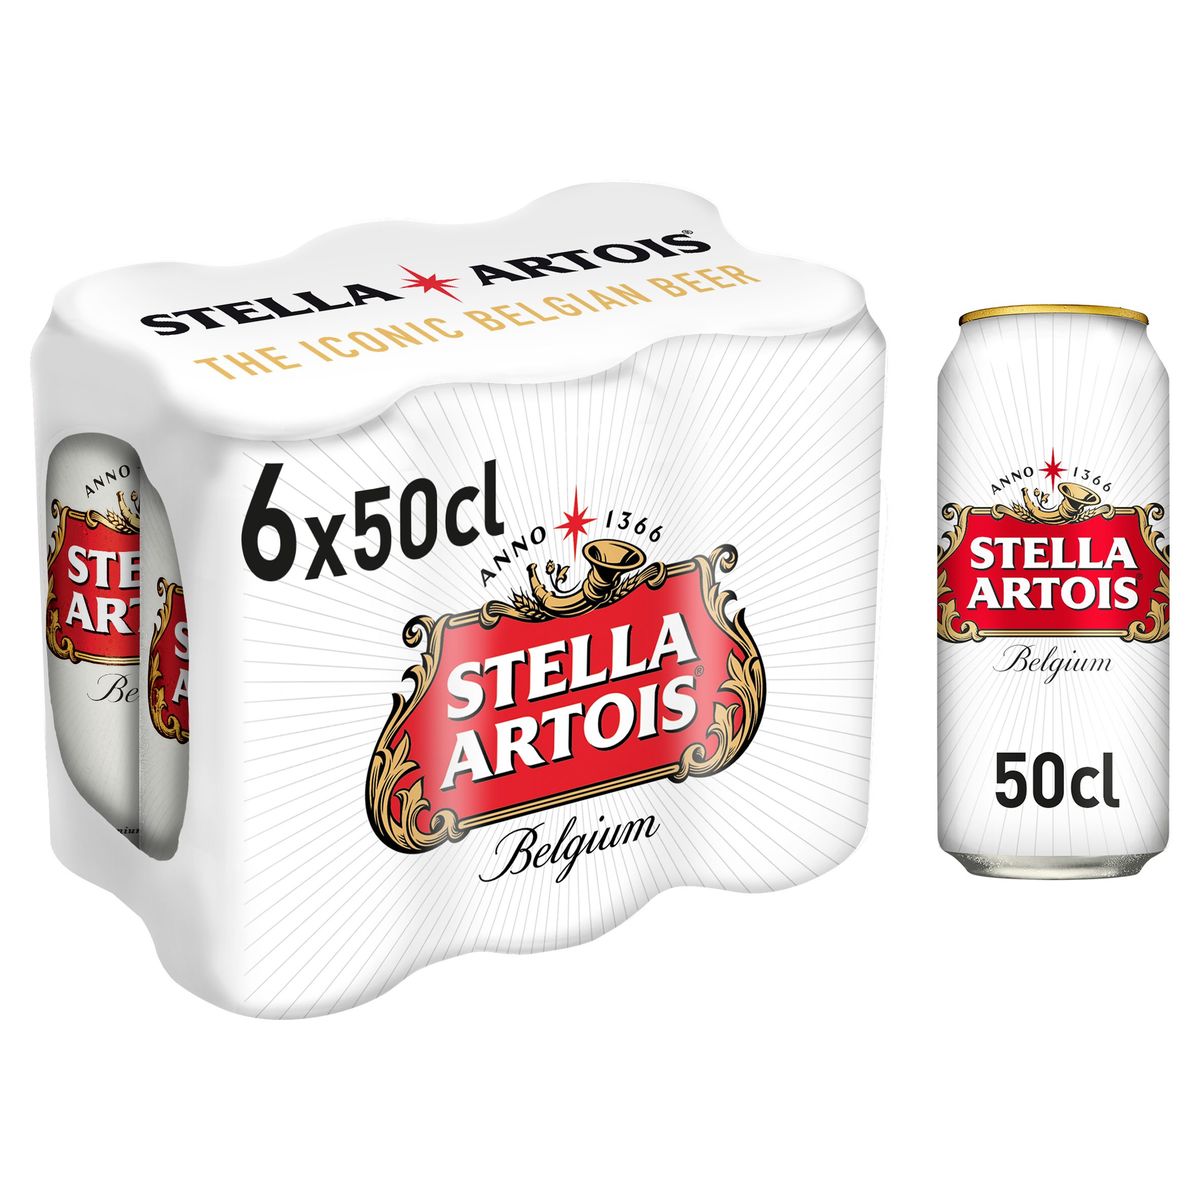 Stella Artois Premium Lager Beer Canettes 6 x 50 cl